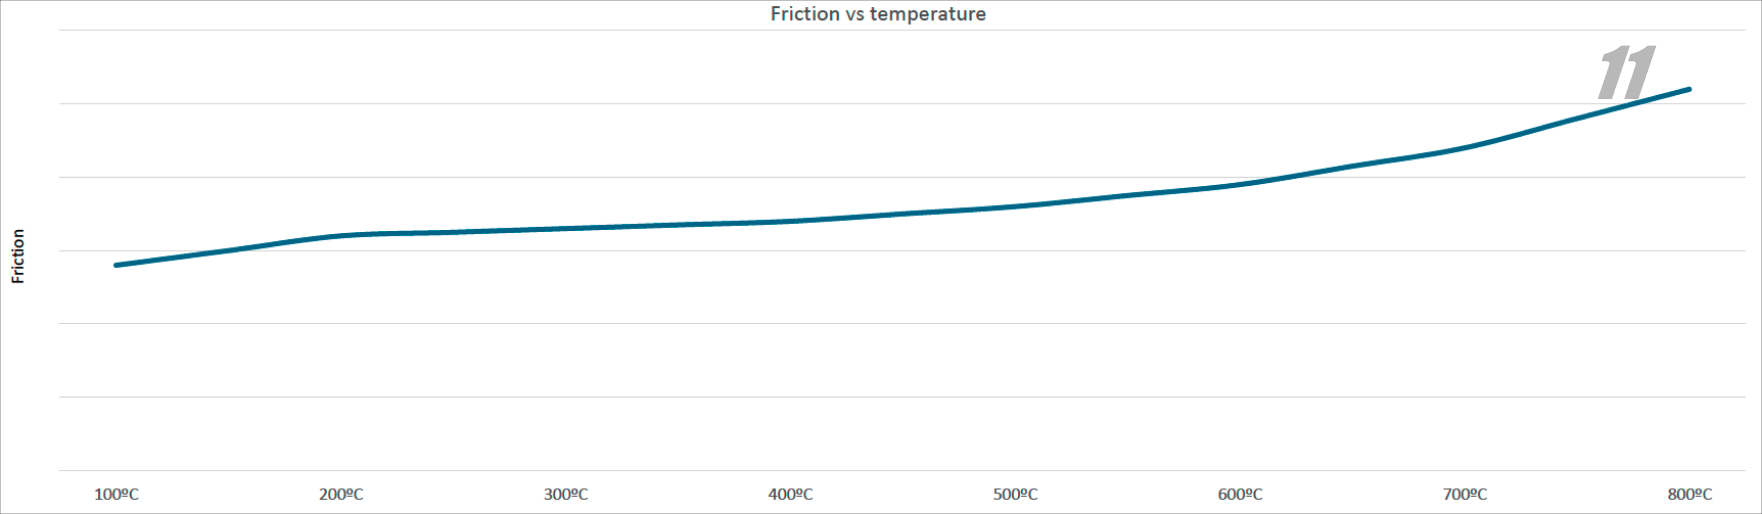 PFC 11 Compound Friction Vs Temperature